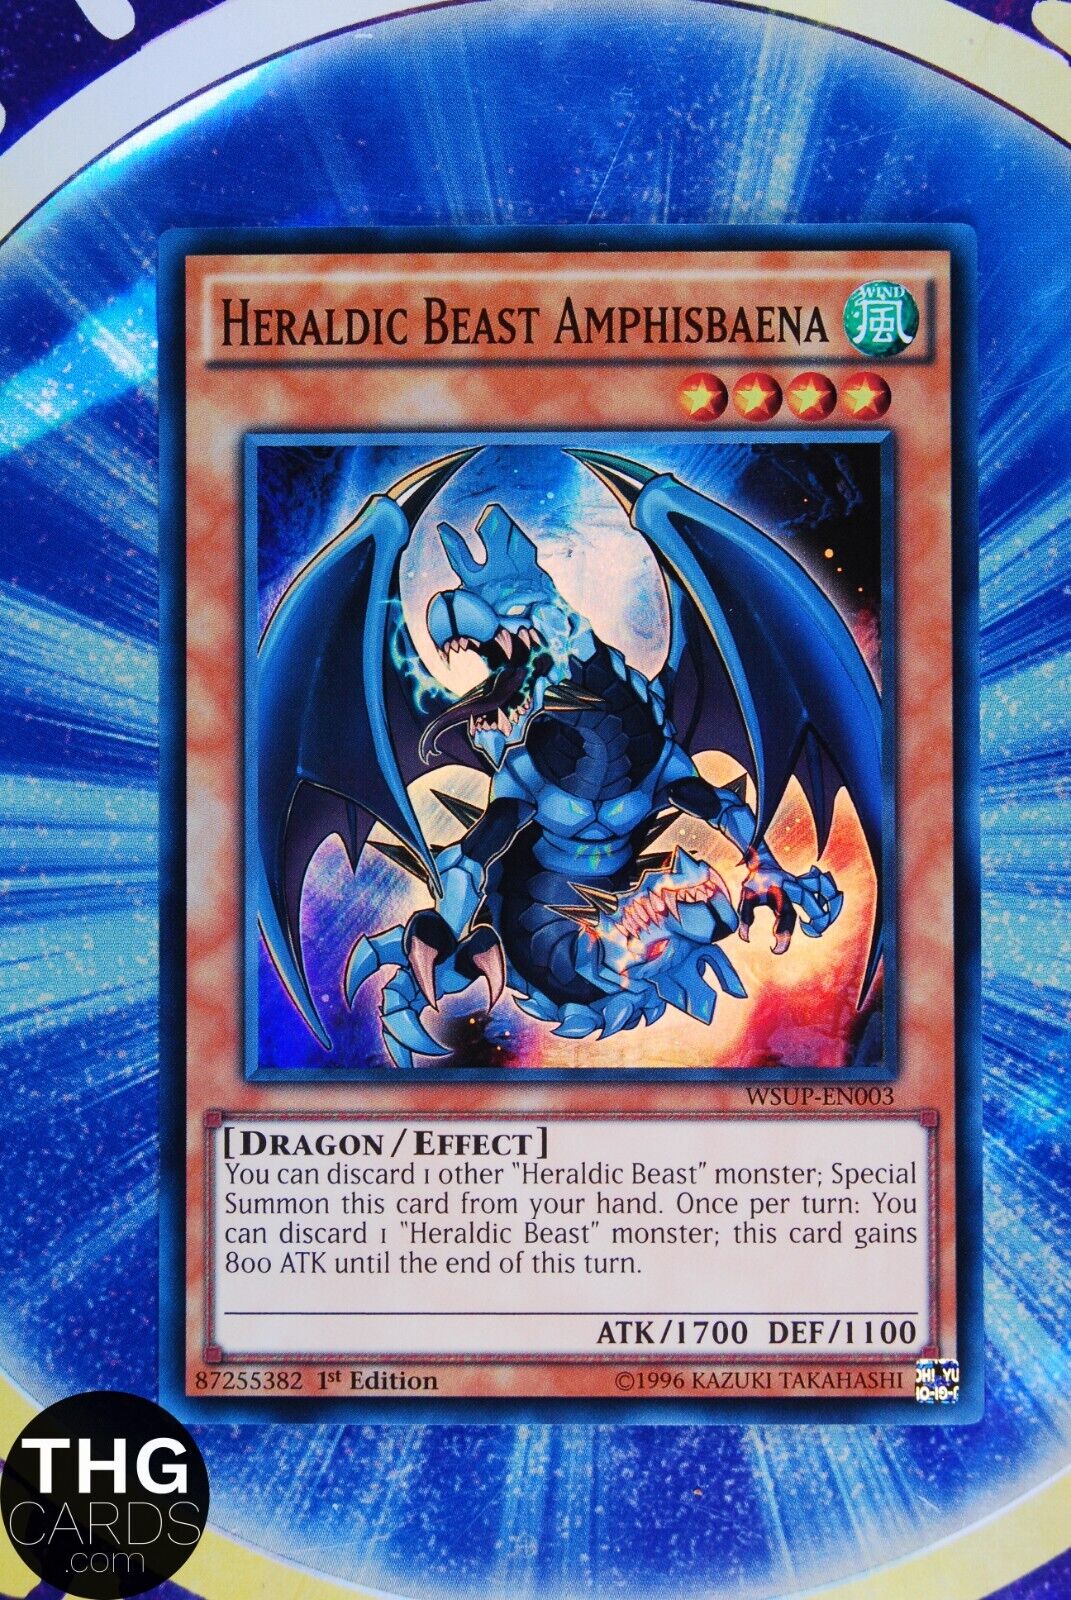 Heraldic Beast Amphisbaena WSUP-EN003 1st Edition Super Rare Yugioh Card